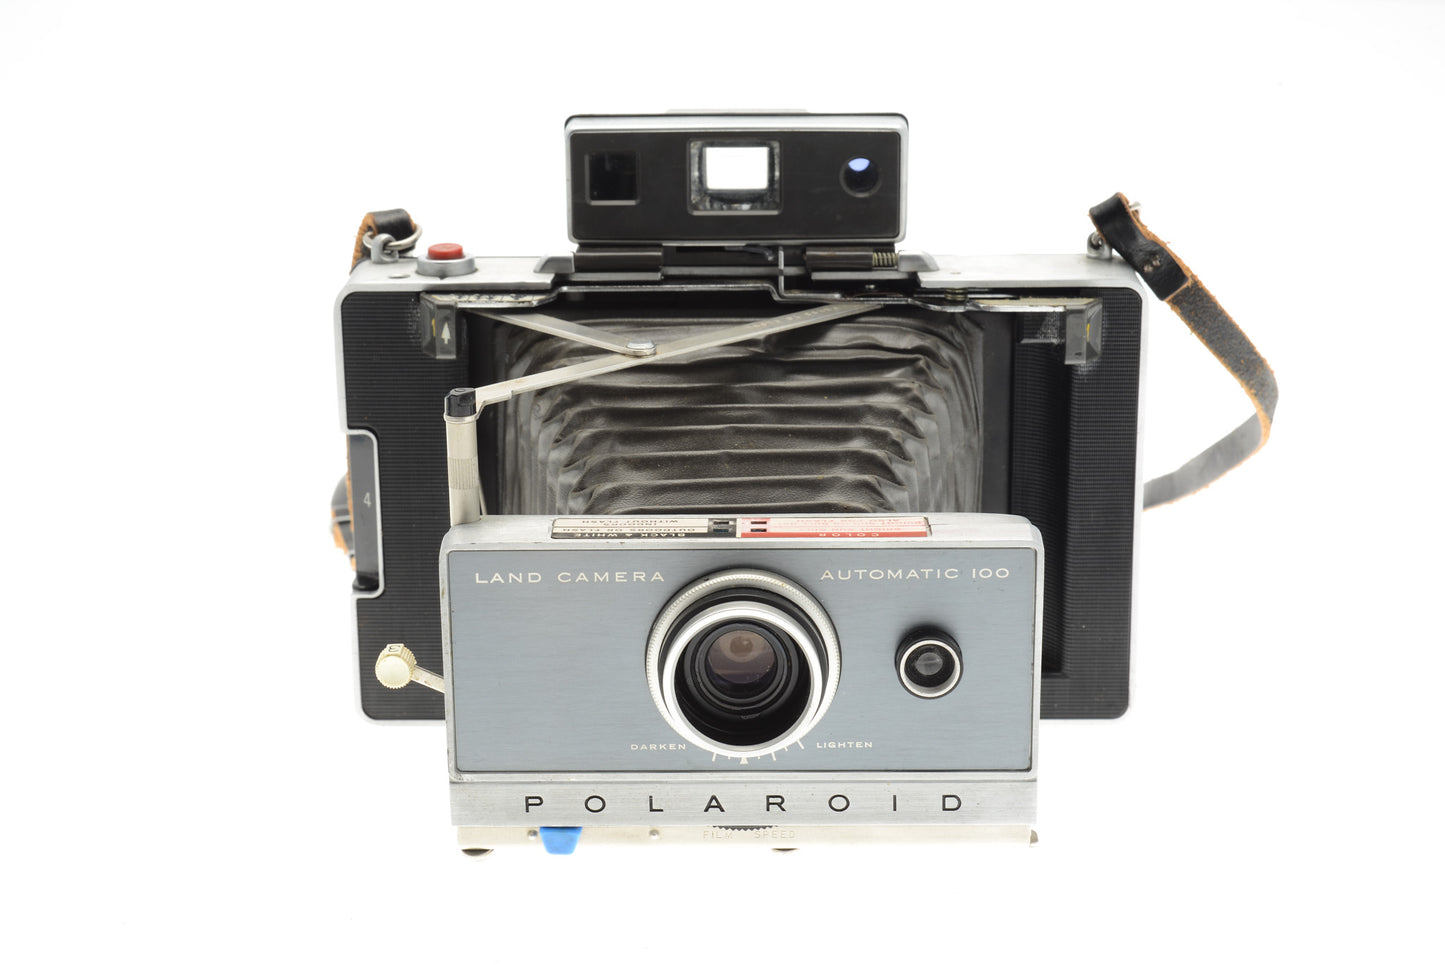 Polaroid Automatic 100 Land Camera - Camera